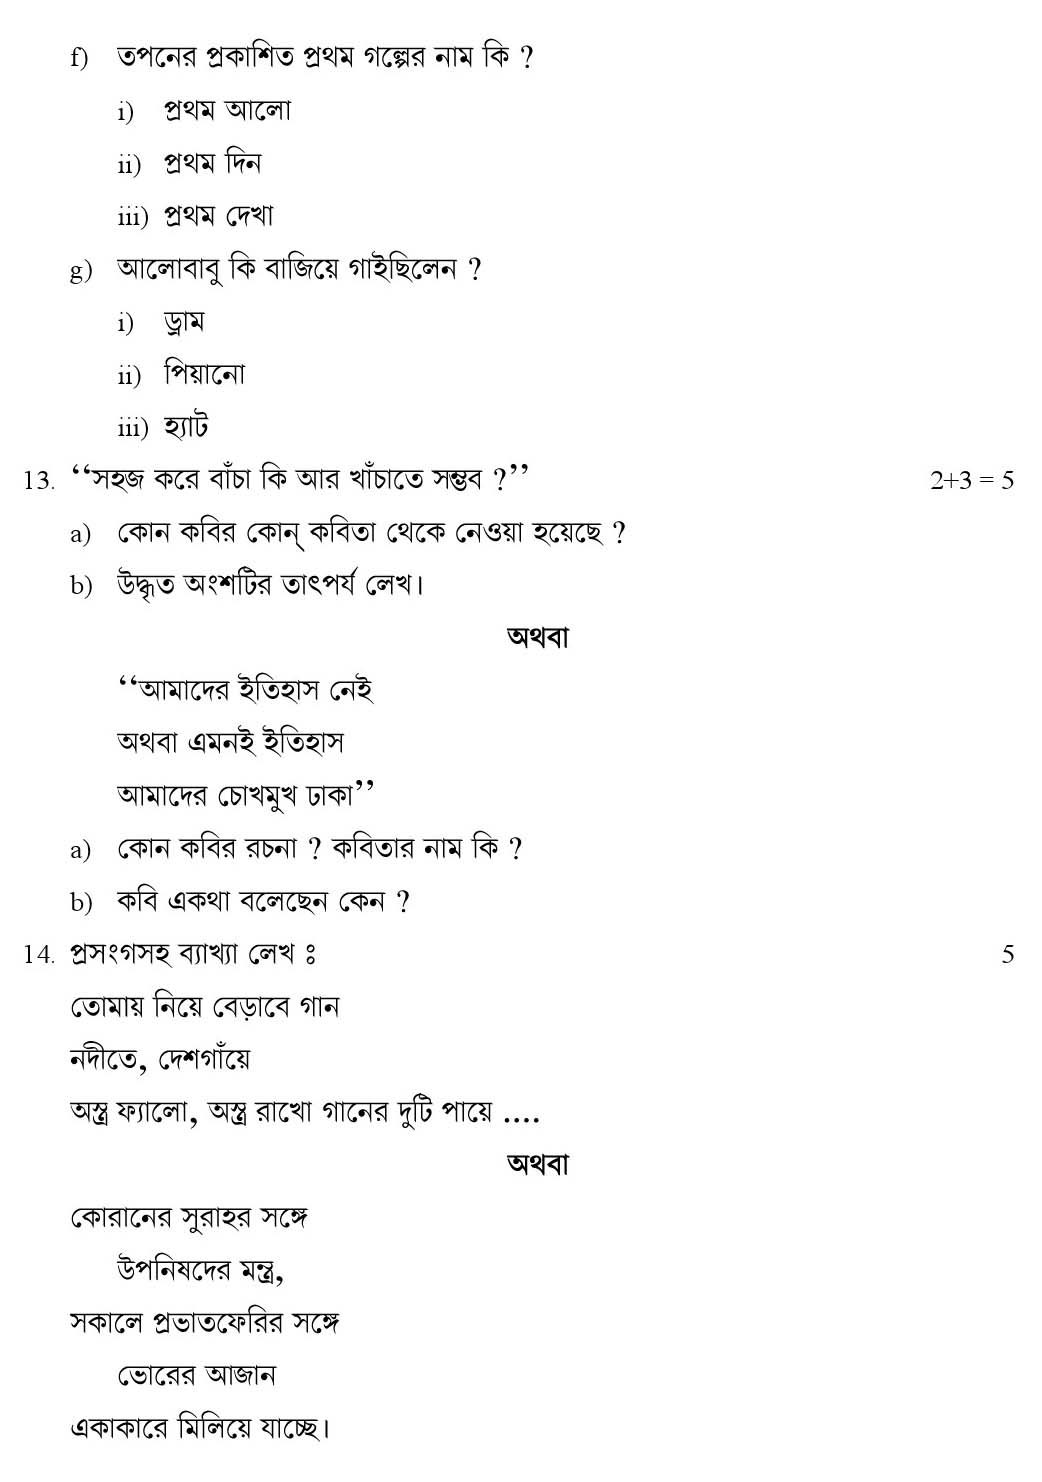 Bengali CBSE Class X Sample Question Paper 2018-19 - Image 8